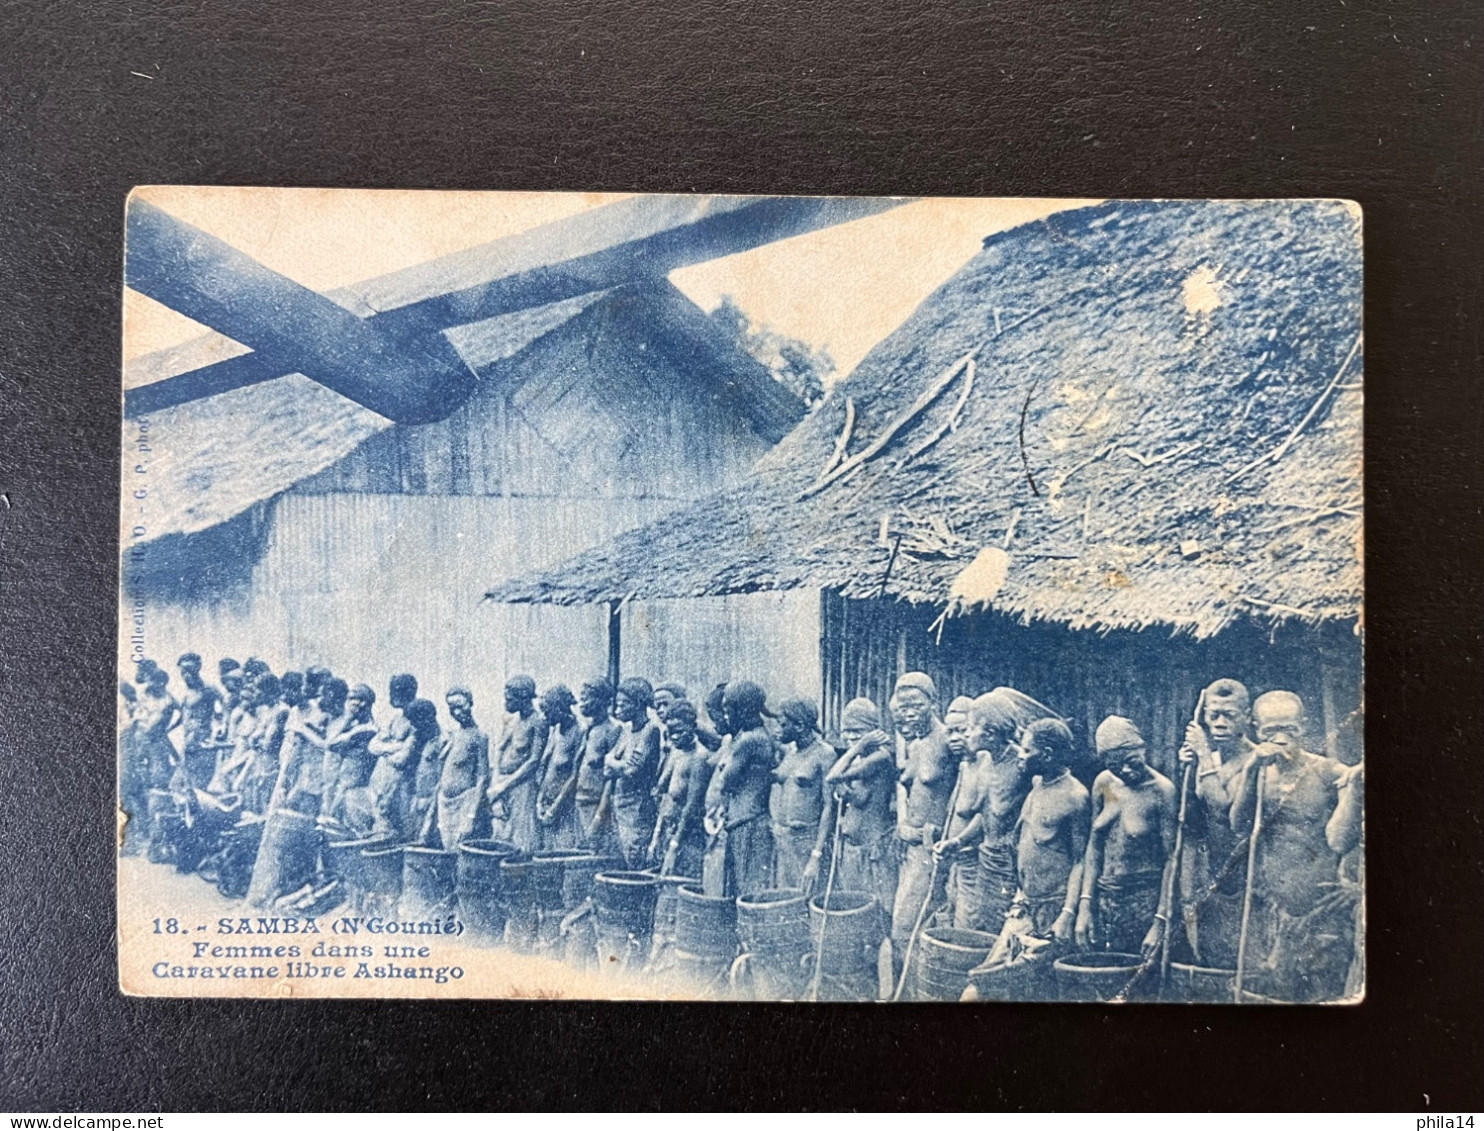 SP CPA GABON / SAMBA (N'GOUINE) FEMMES DANS UNE CARAVANE LIBRE ASHANGO / 1911 / PLI - Covers & Documents